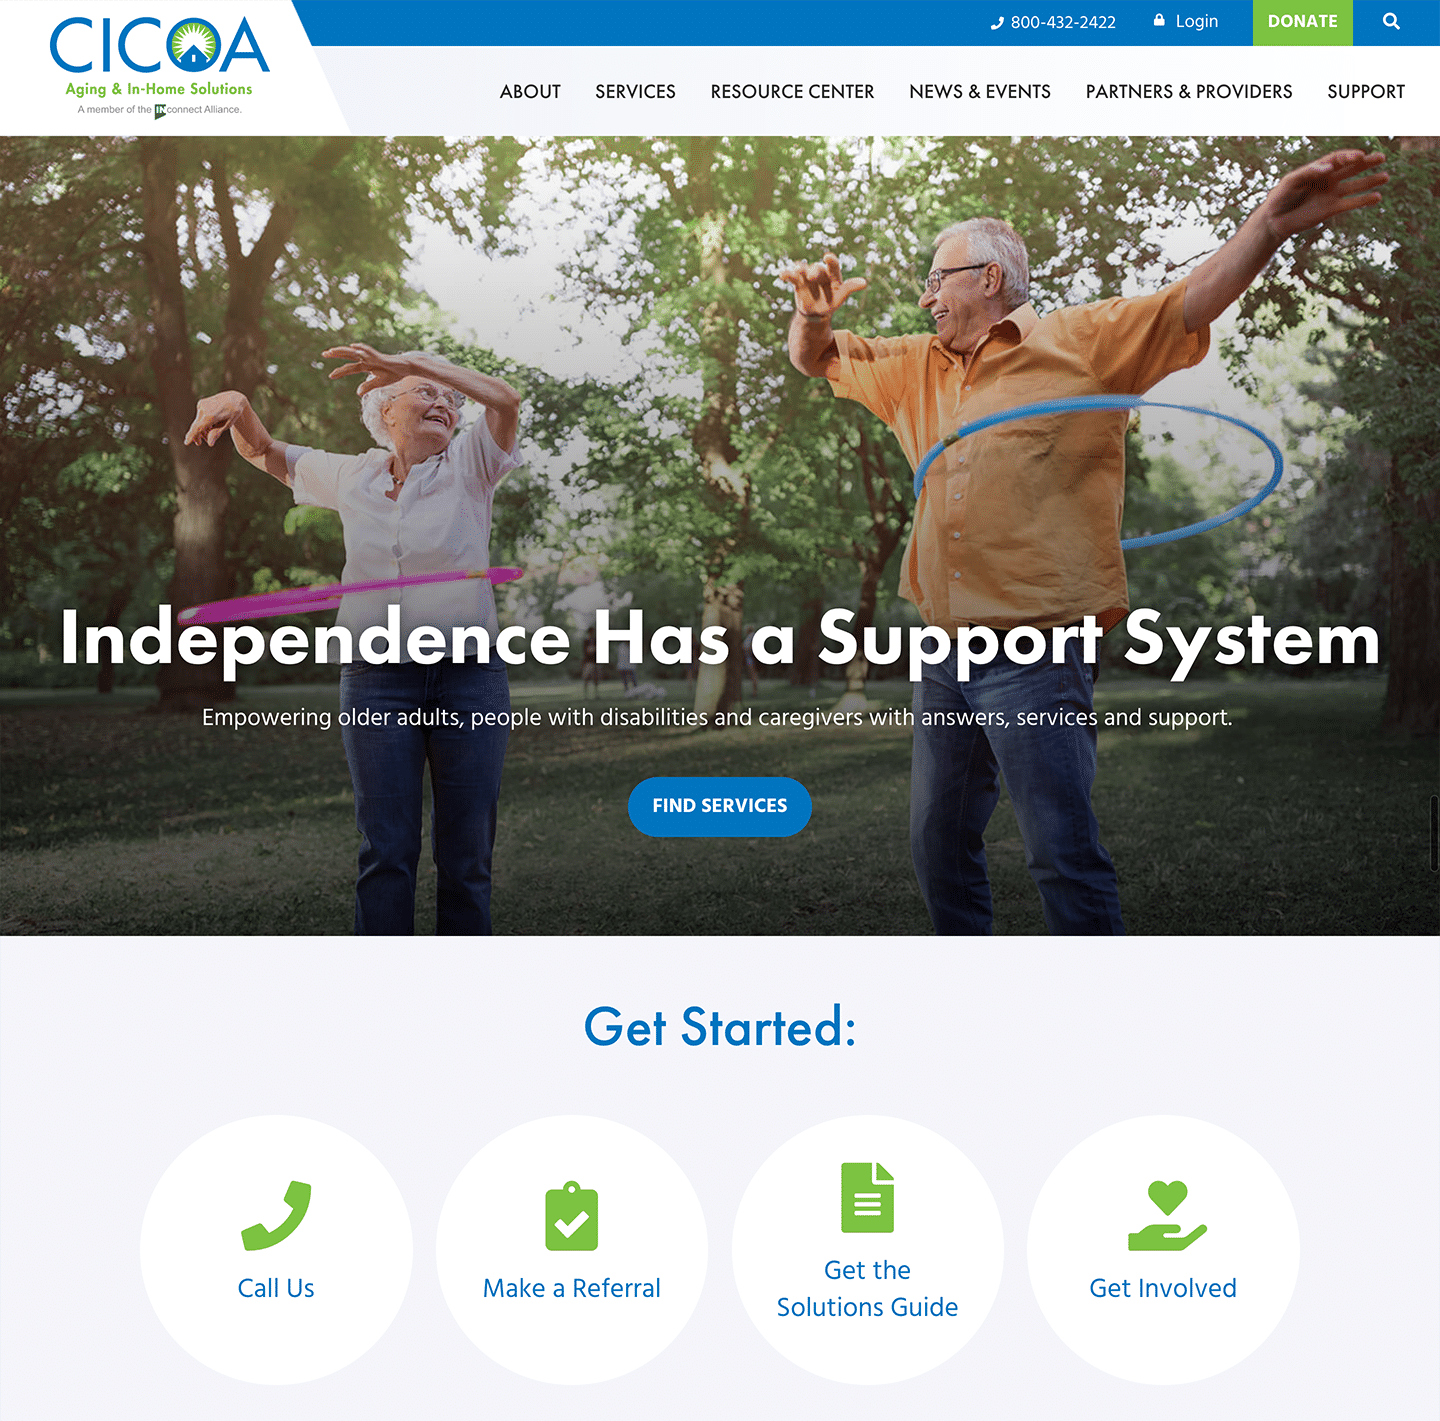 New CICOA website